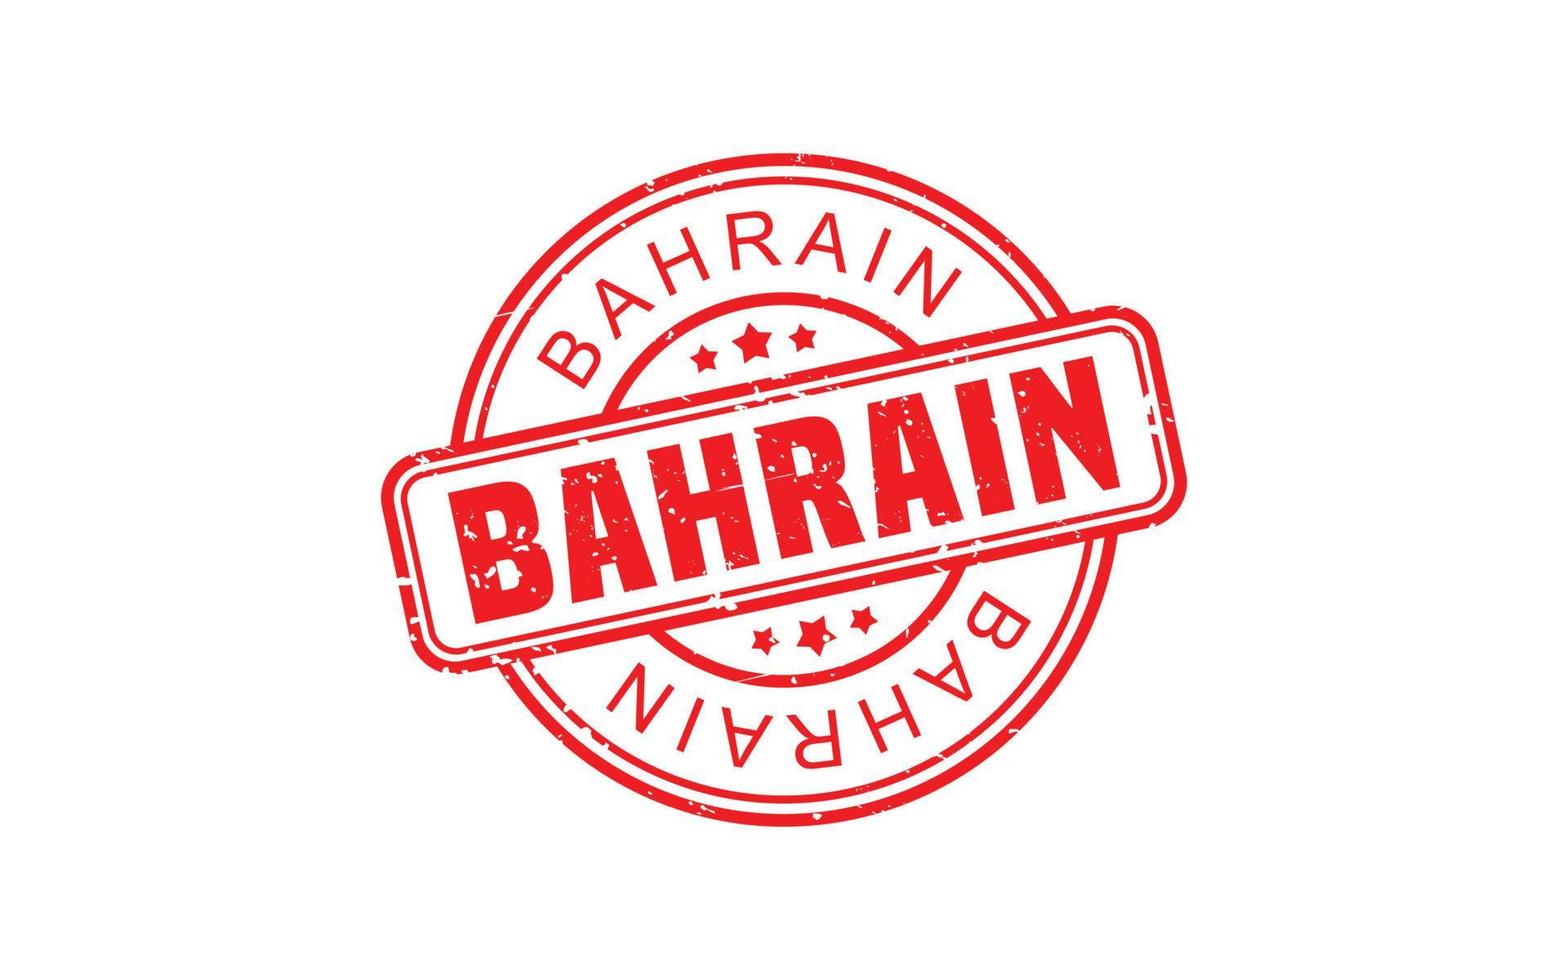 borracha de carimbo do bahrein com estilo grunge em fundo branco vetor